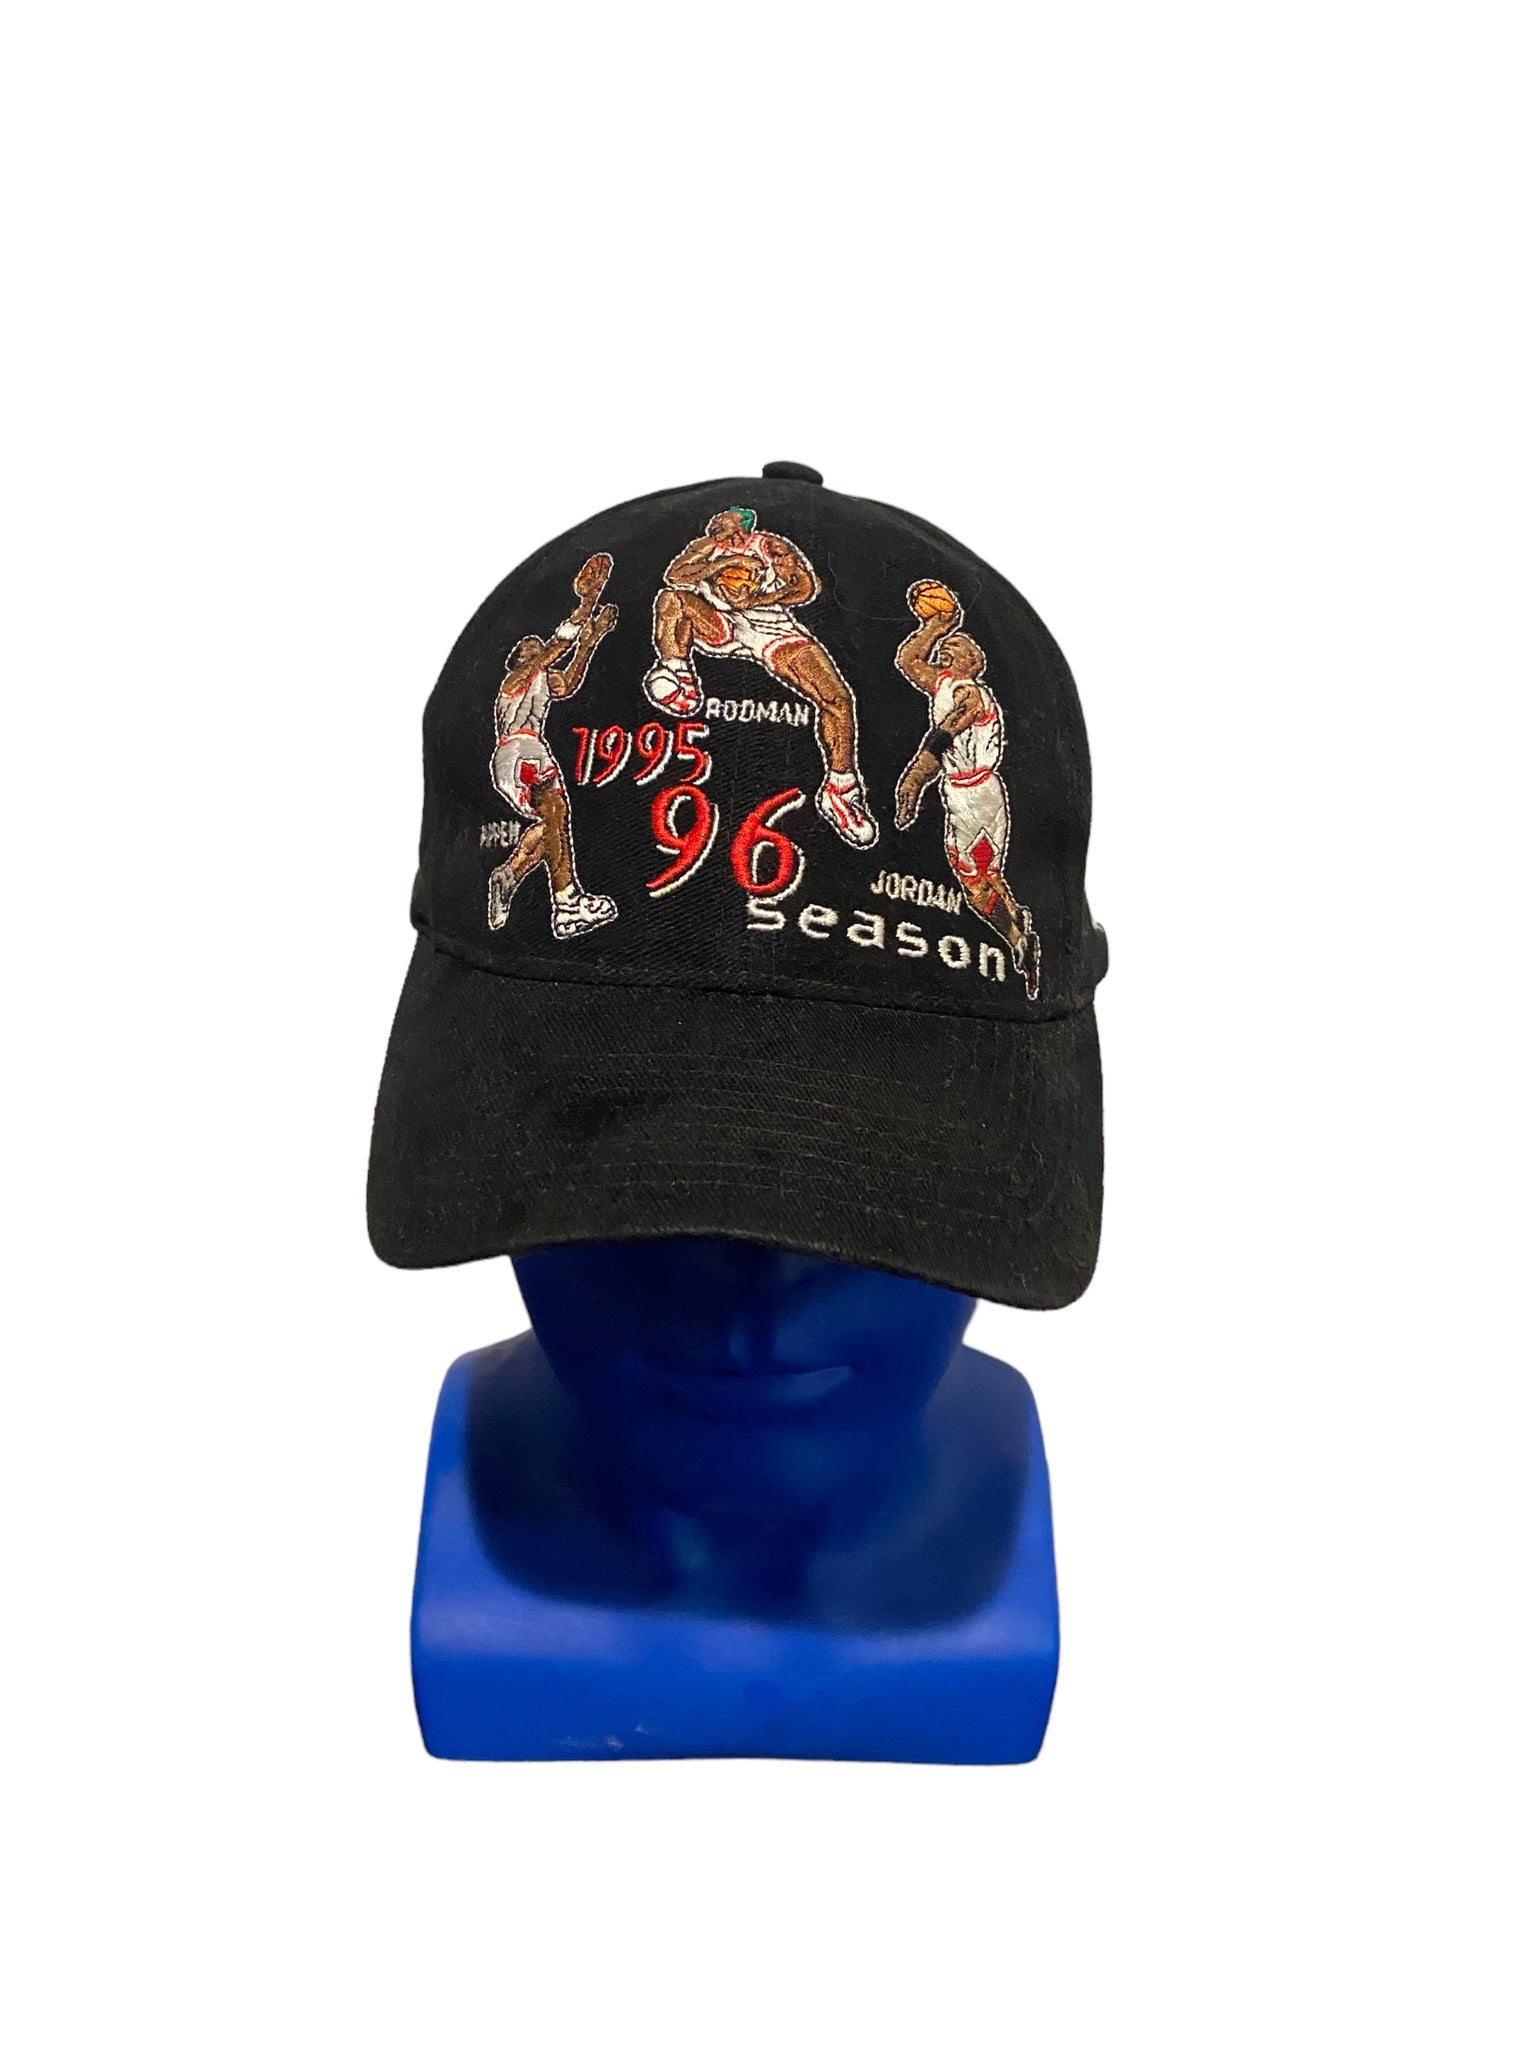 Vintage sports Specialties 95-96 Jordan, Pippen & Rodman Snapback Hat Rare